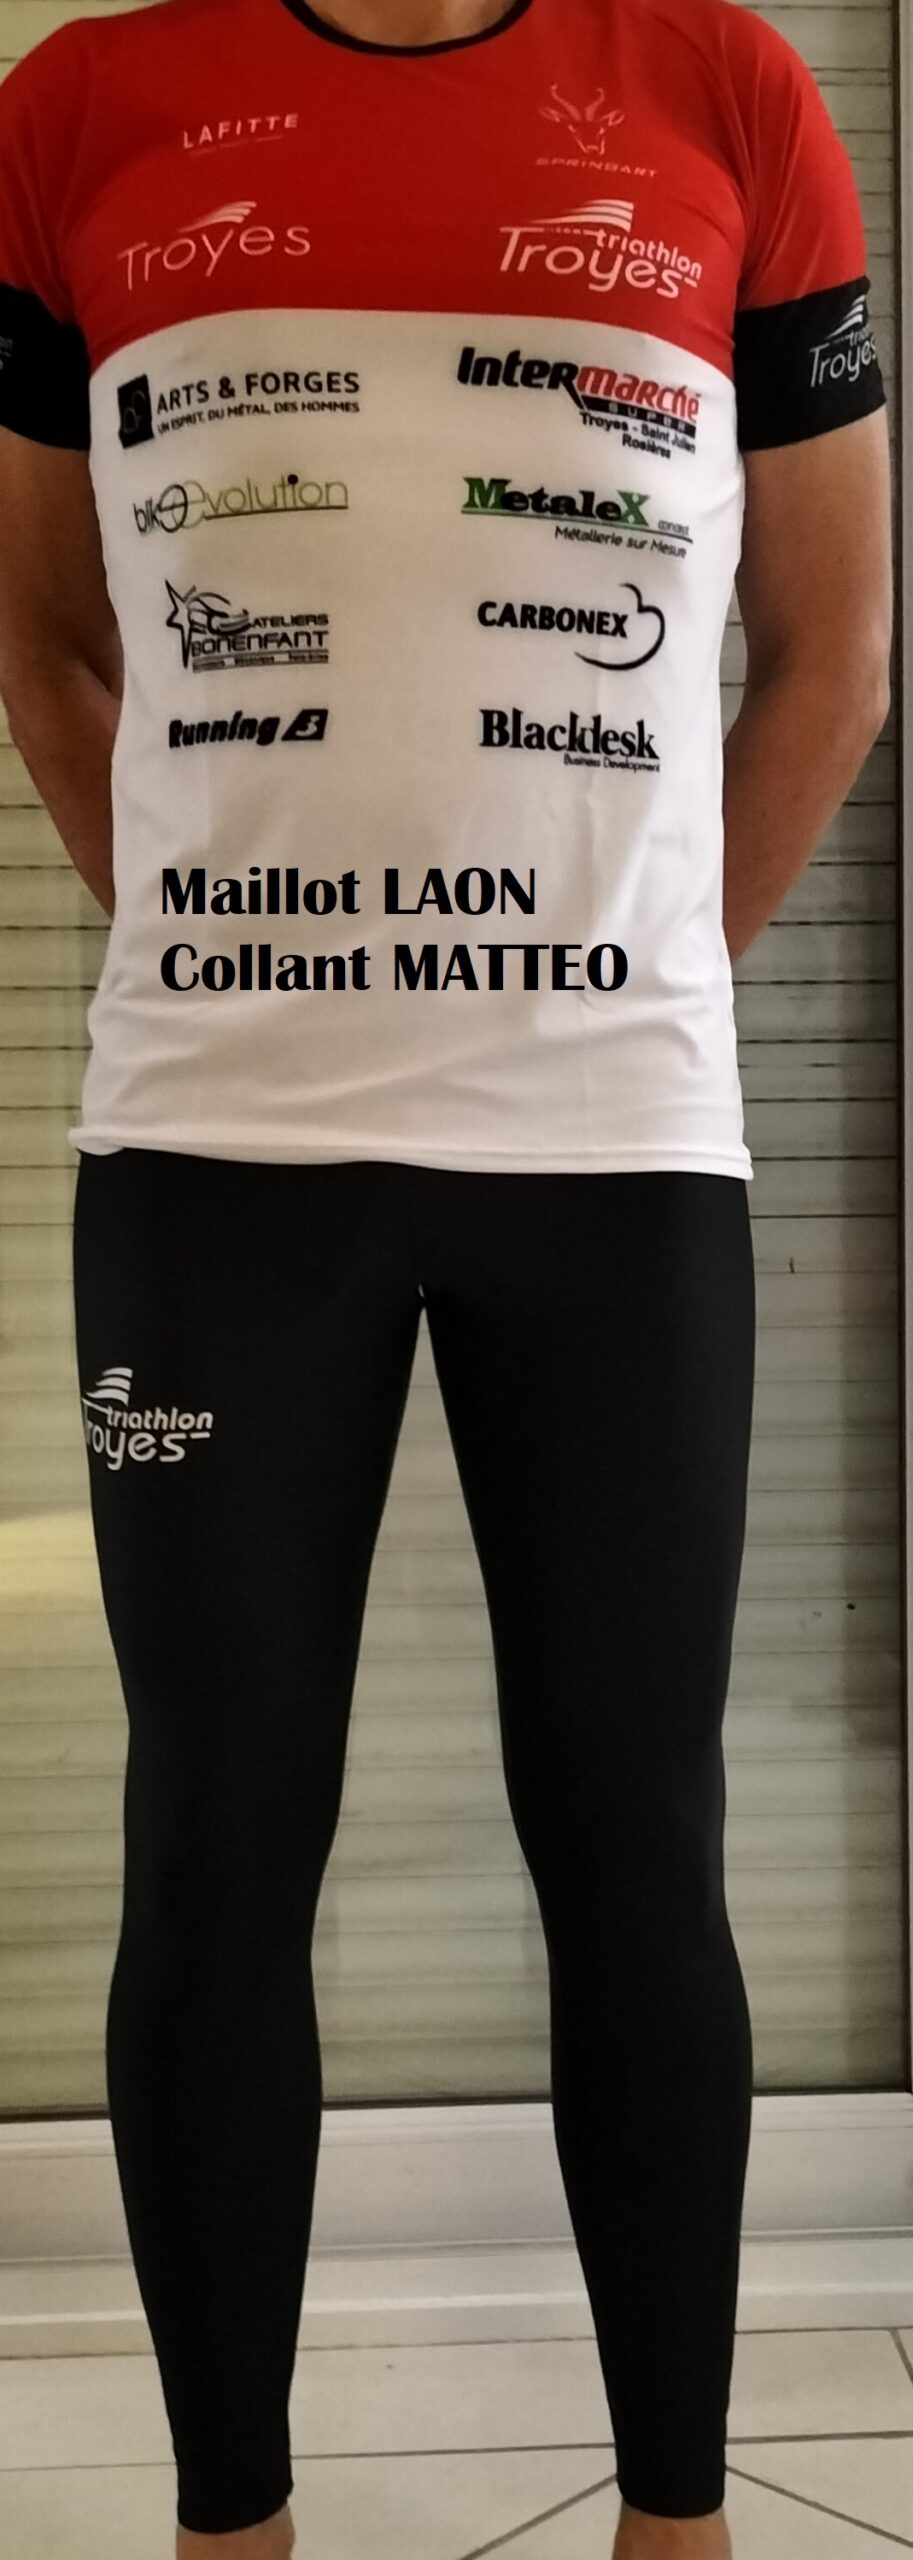 Maillot LAON Collant MATTEO